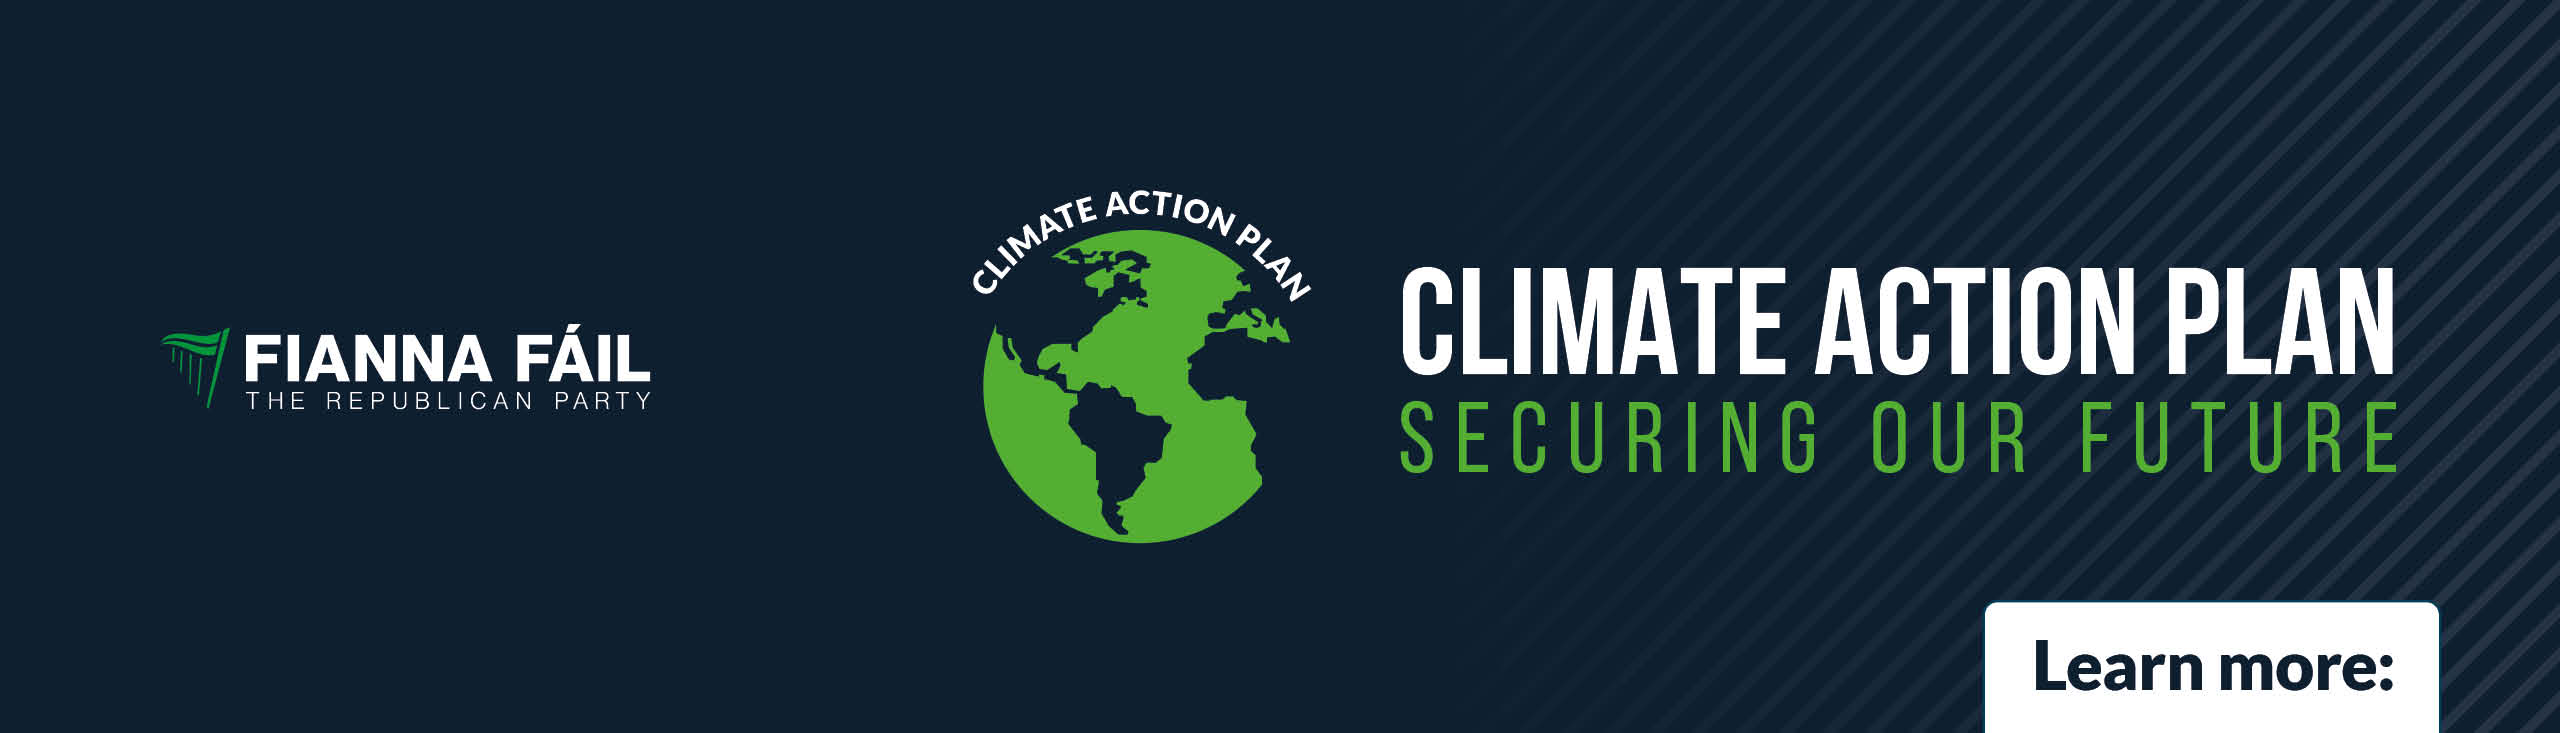 Homepage_ClimateActionPaln